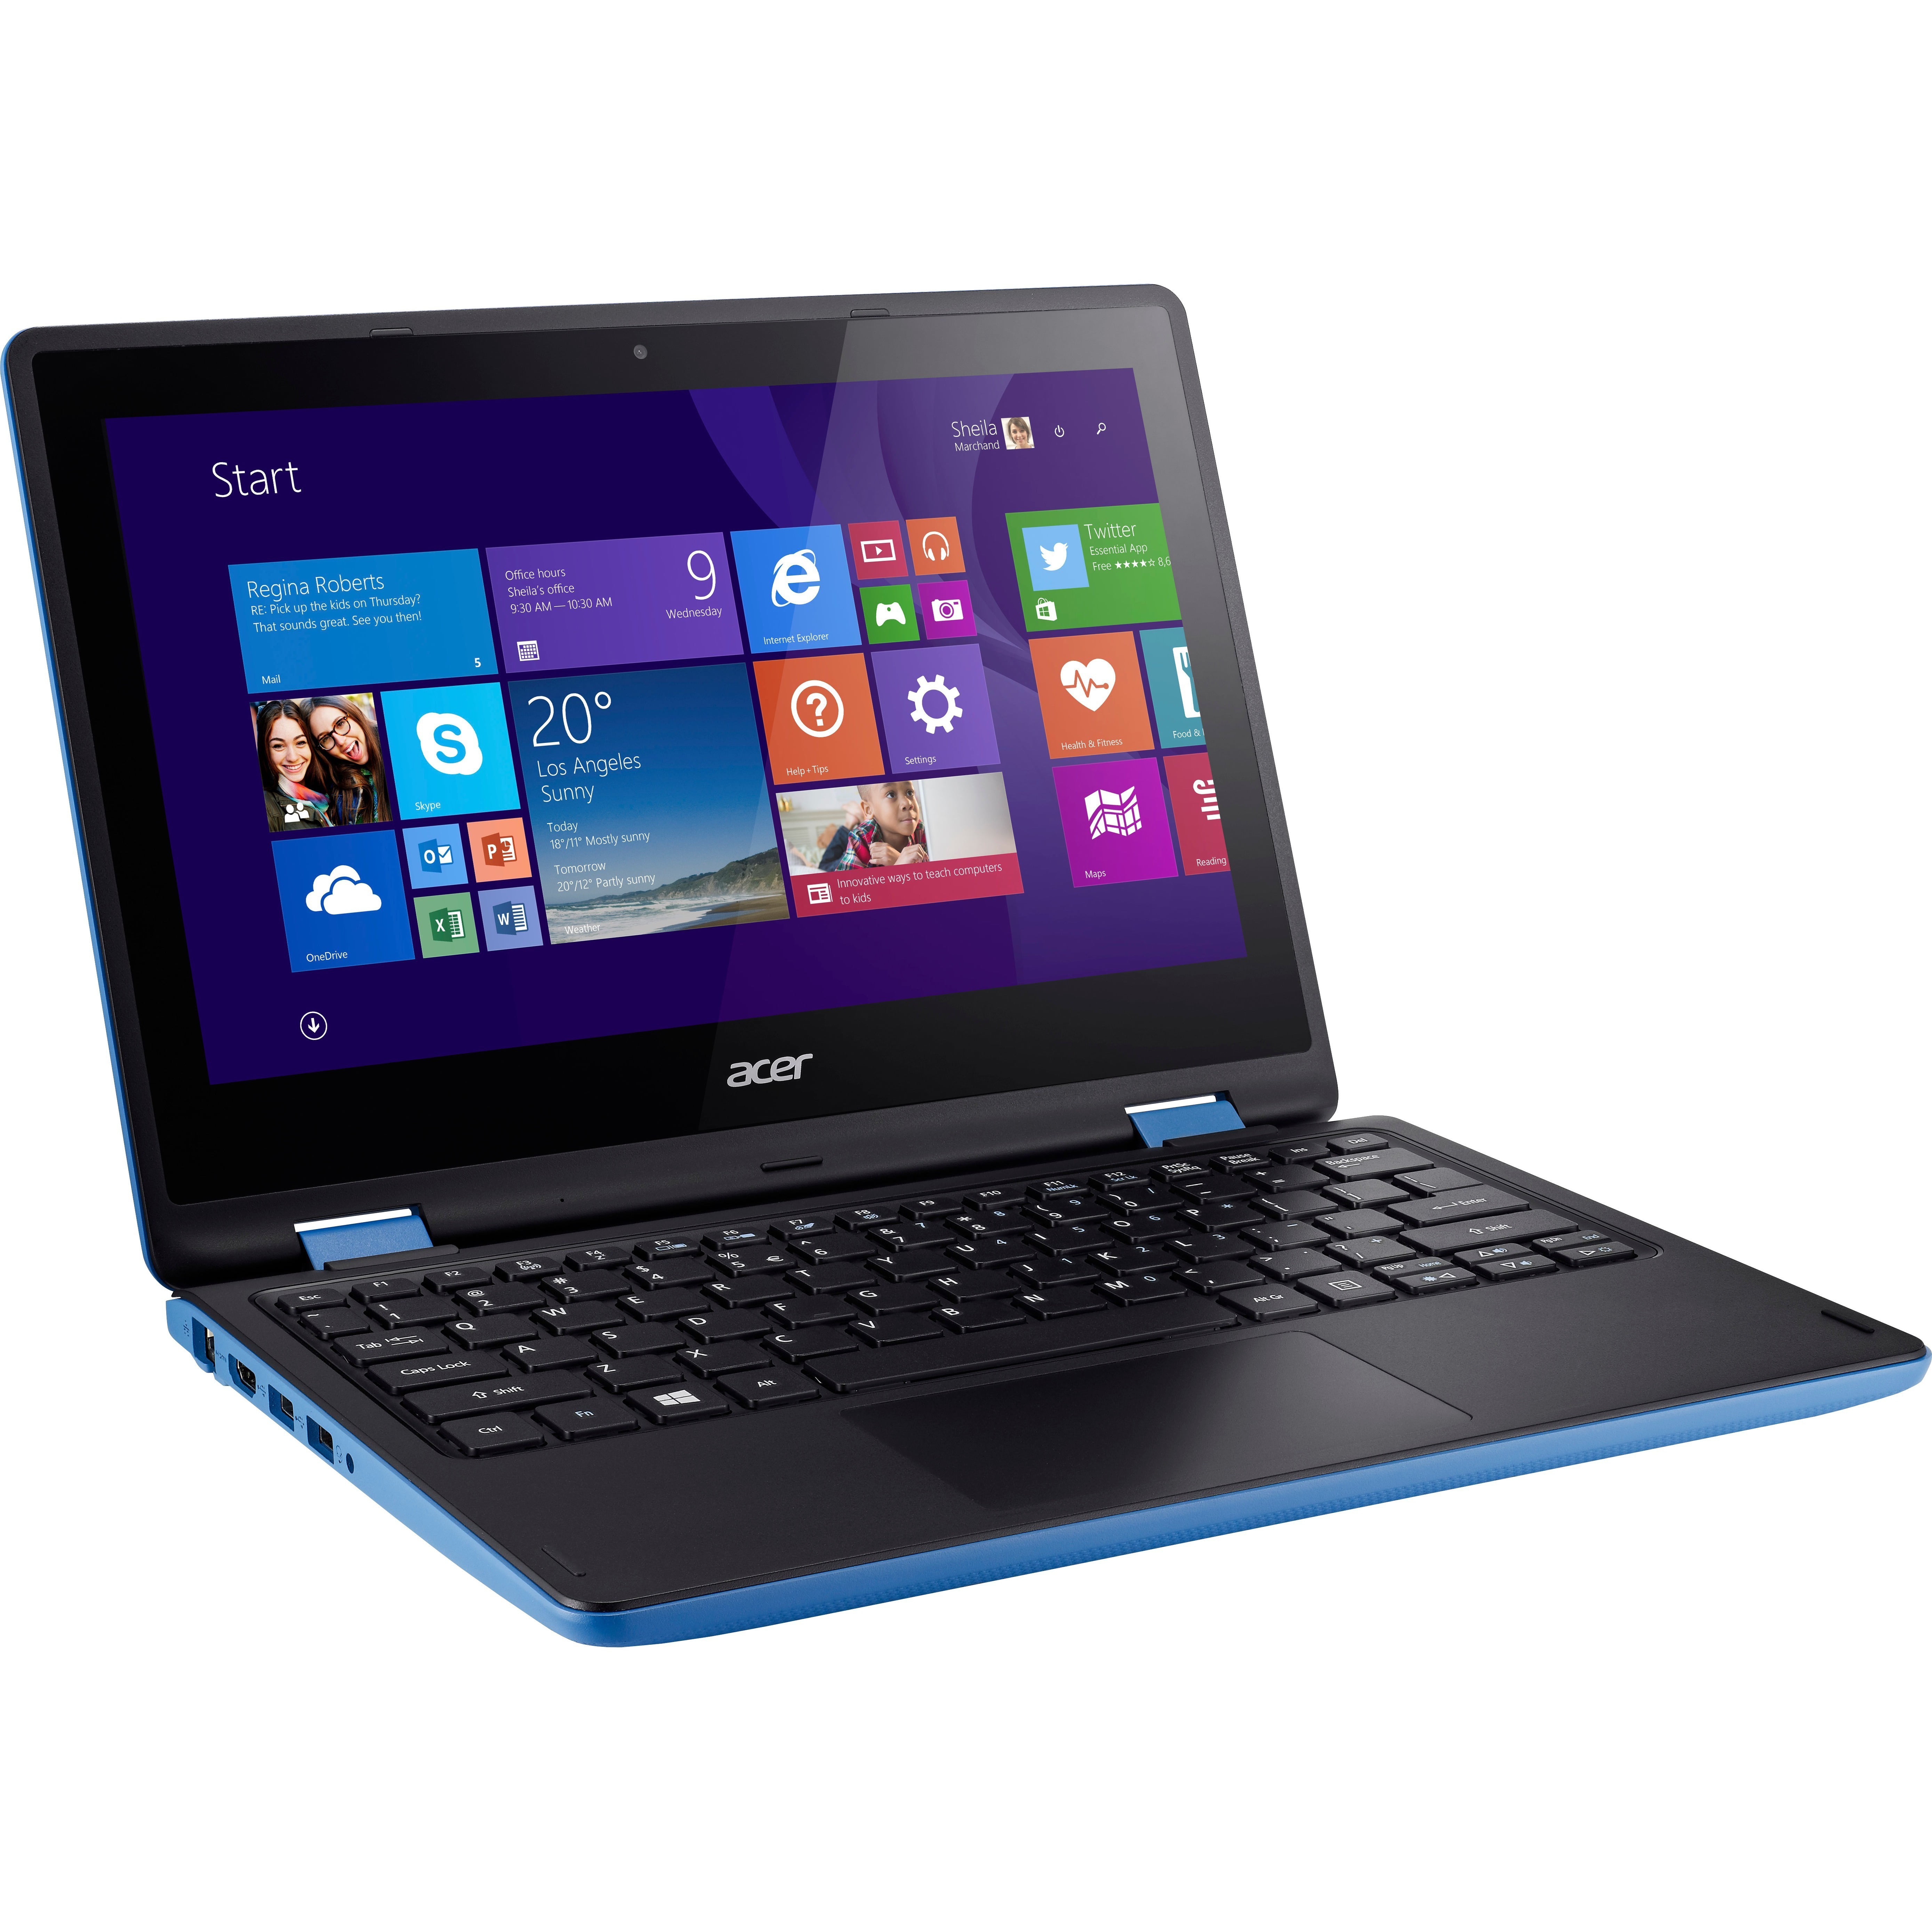 Acer Aspire 11 6 Touchscreen Laptop Intel Celeron N3050 2gb Ram 32gb Ssd Windows 10 Home R3 131t C1yf Walmart Inventory Checker Brickseek